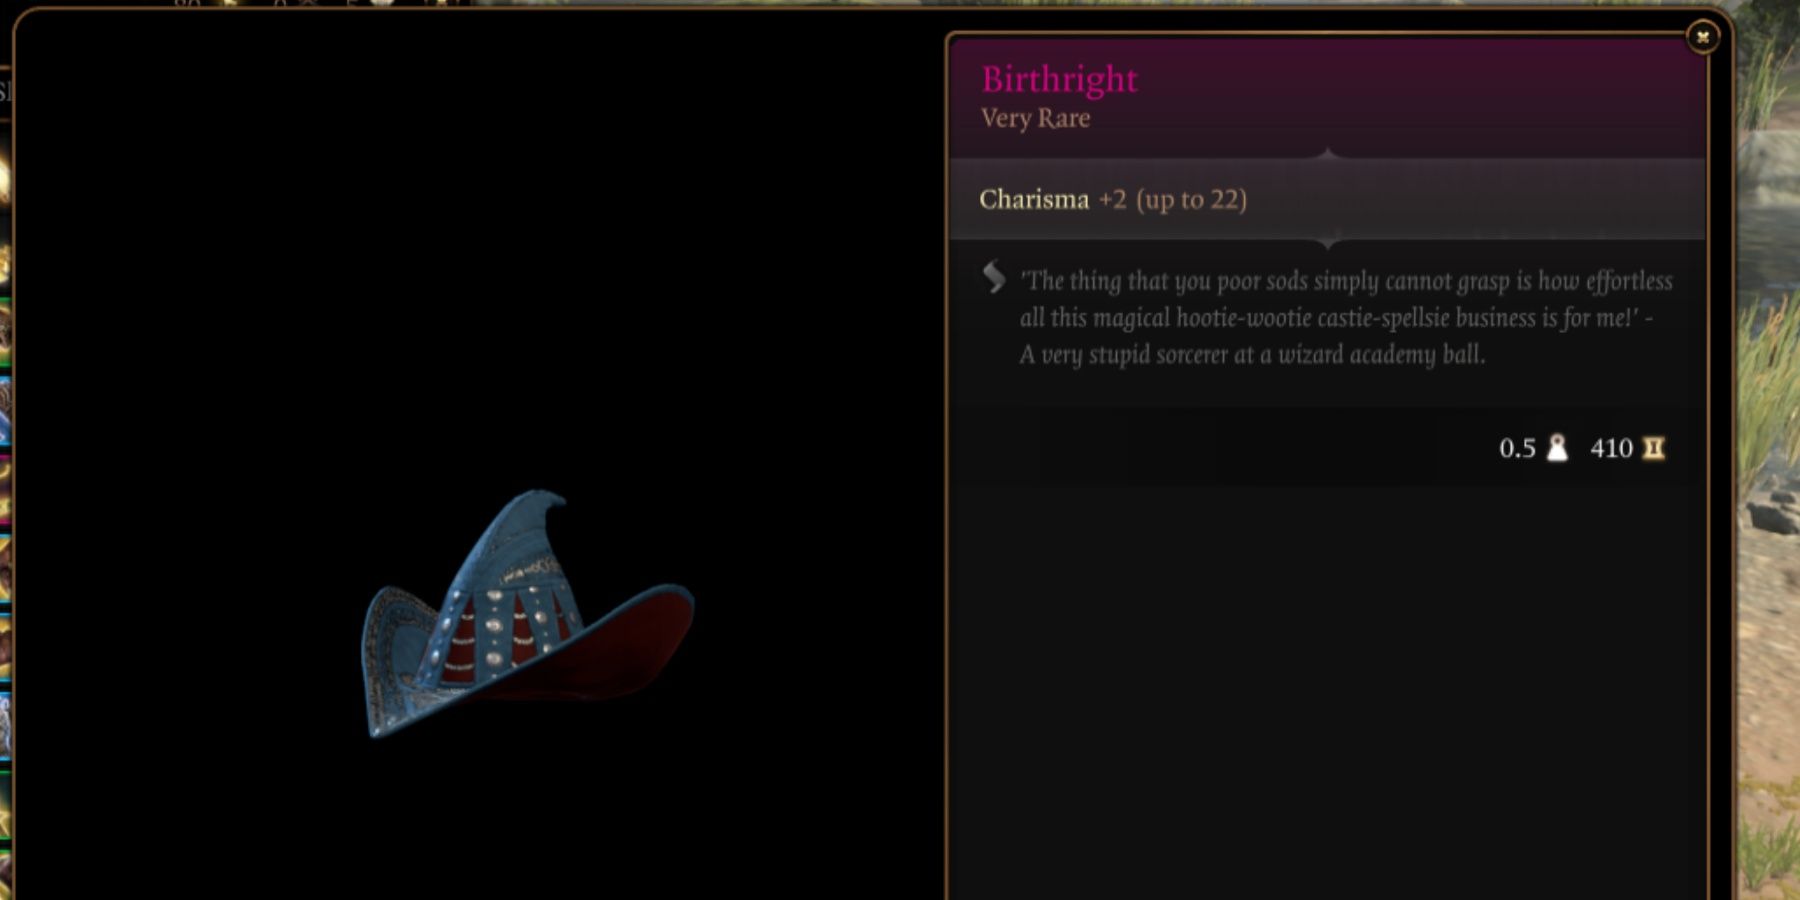 BG3 Birthright in-game item menu description